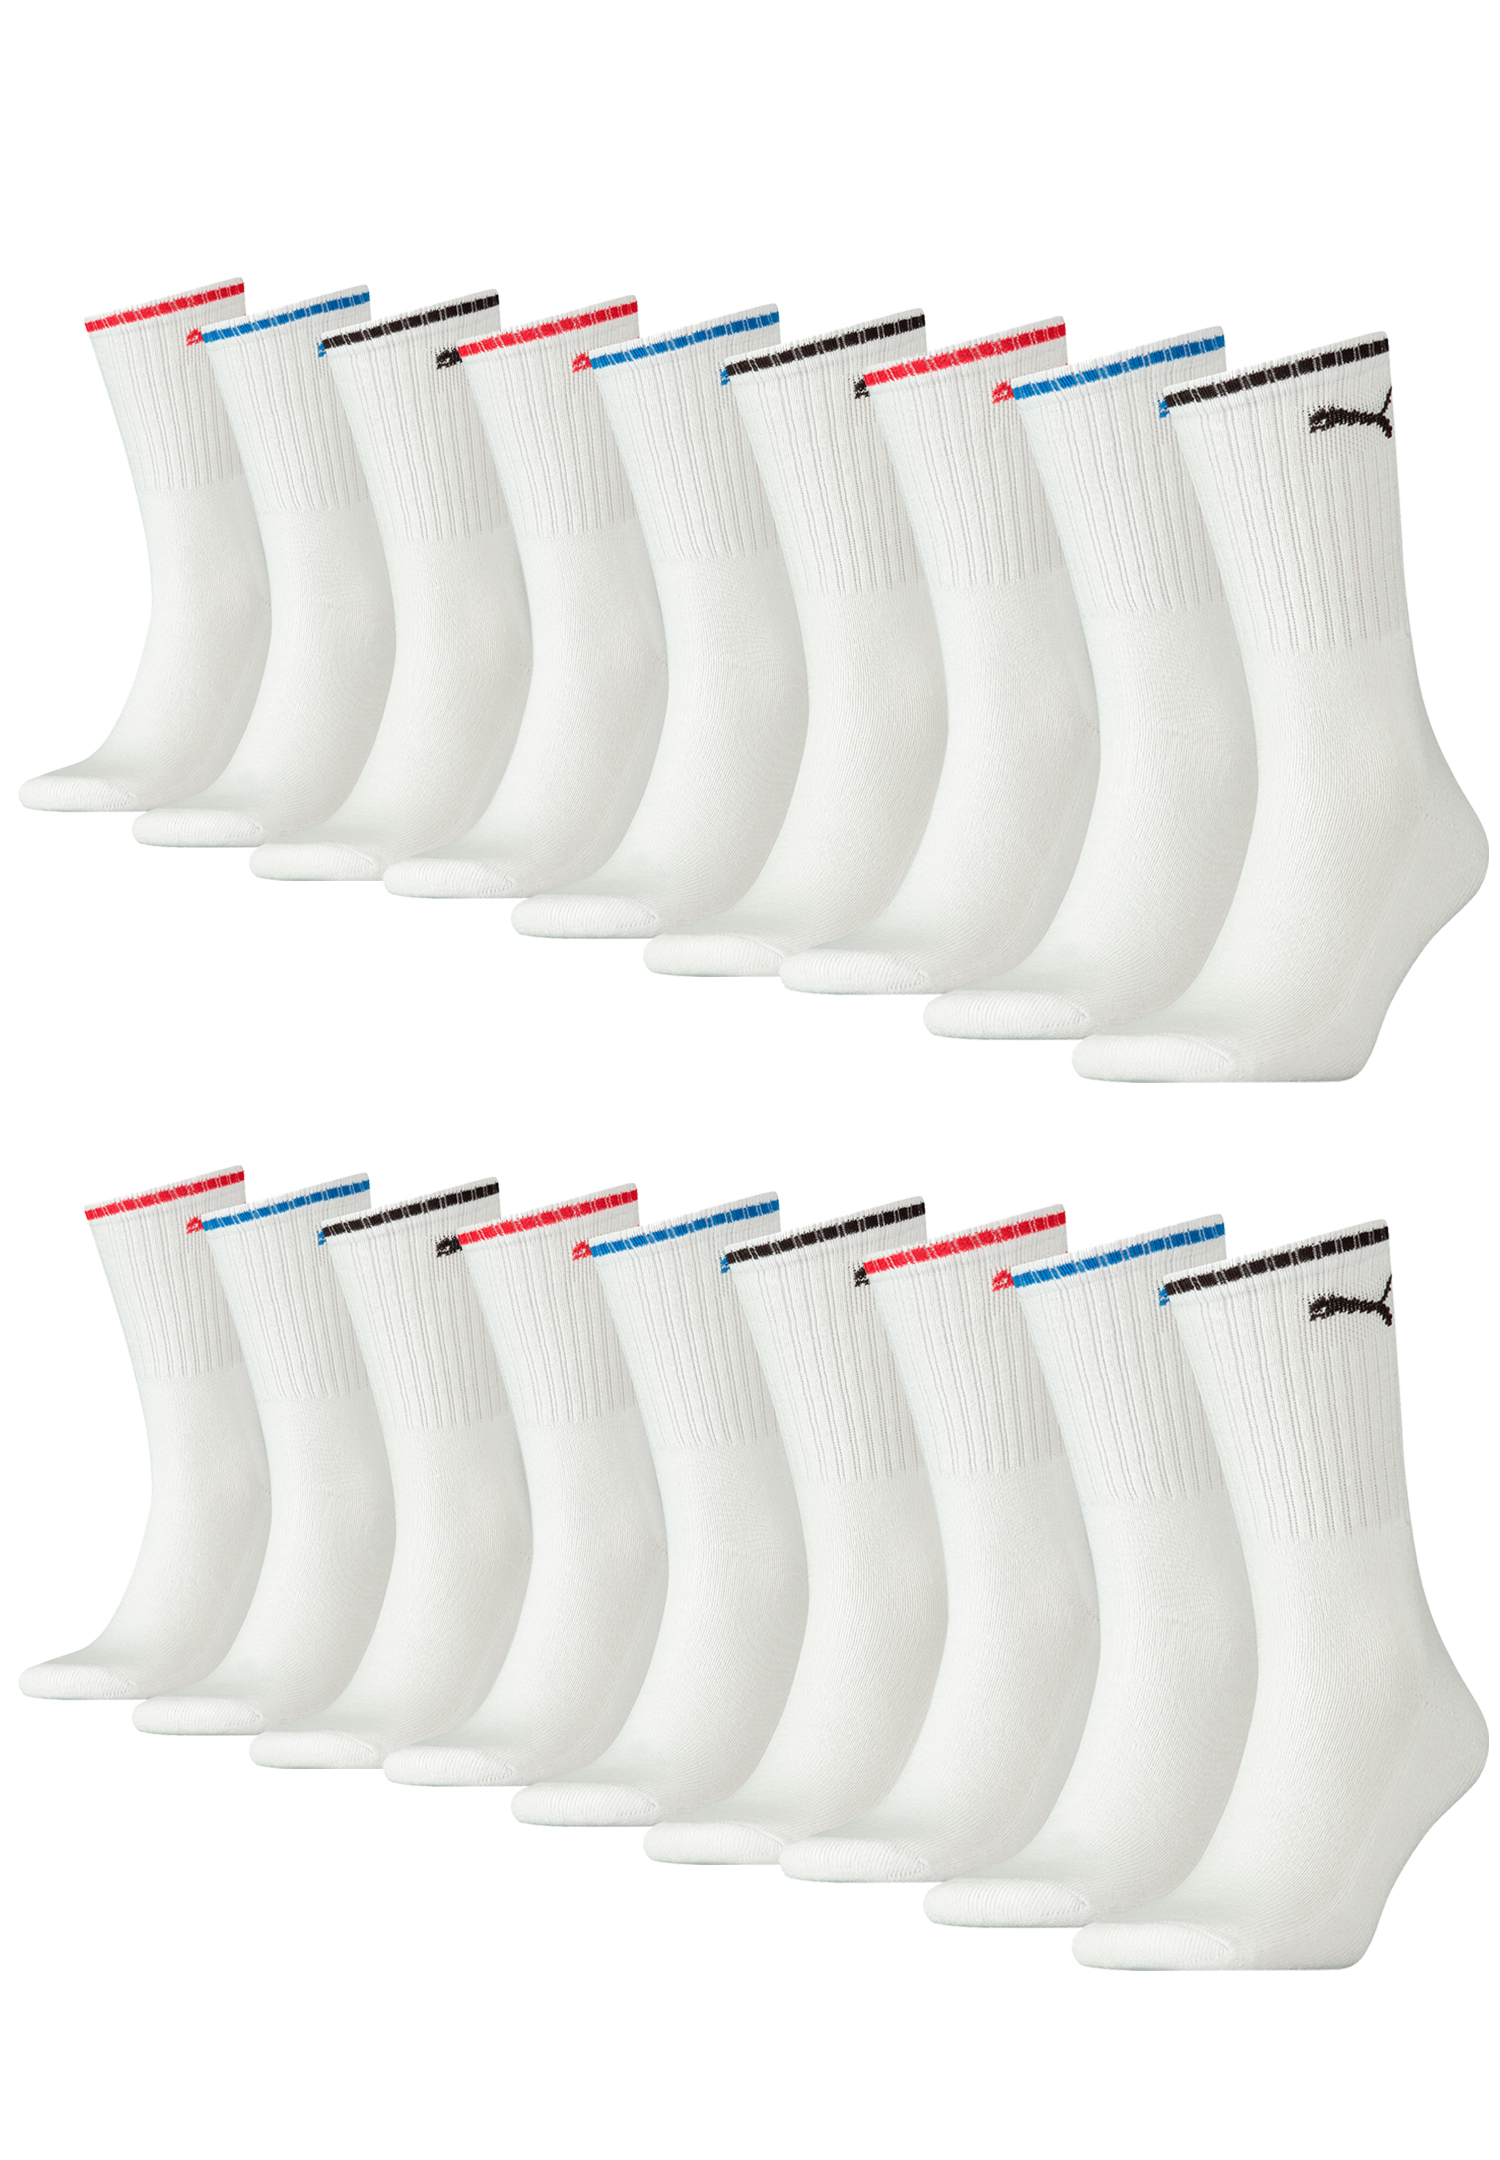 Puma Sportsocken Tennissocken Crew Socken Stripe Tennis Socken Unisex 18 Paar